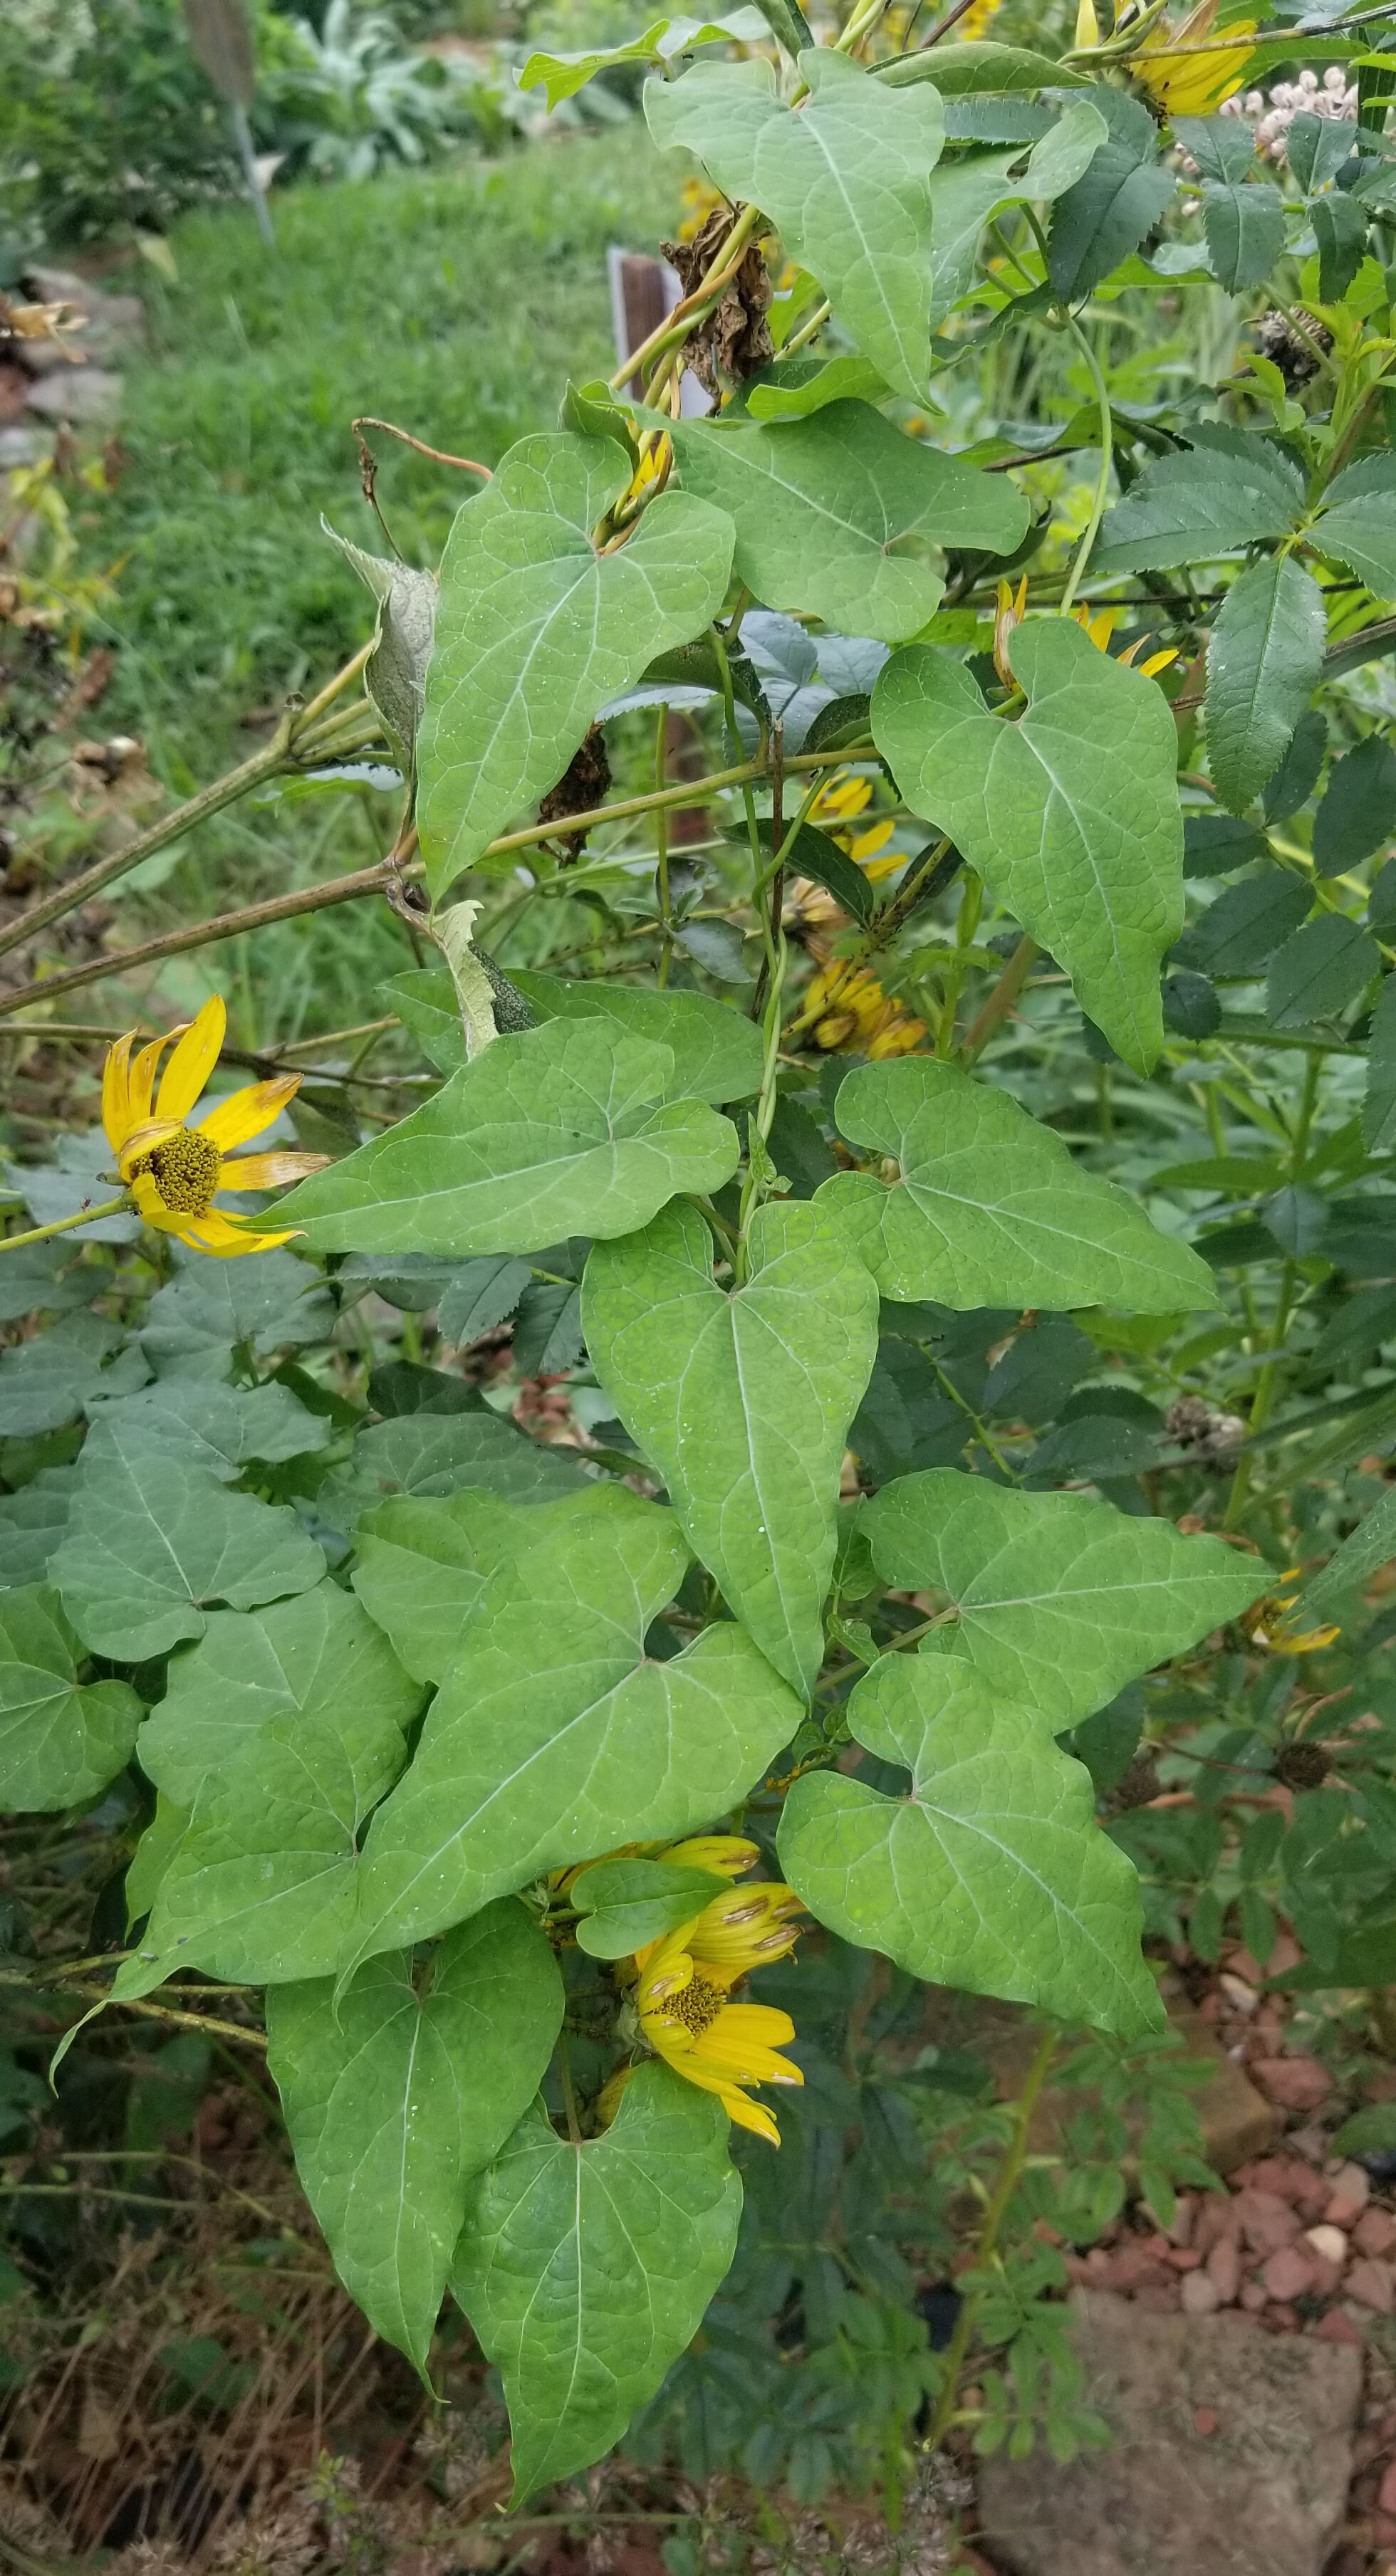 Native look-a-like, honeyvine milkweed leaves